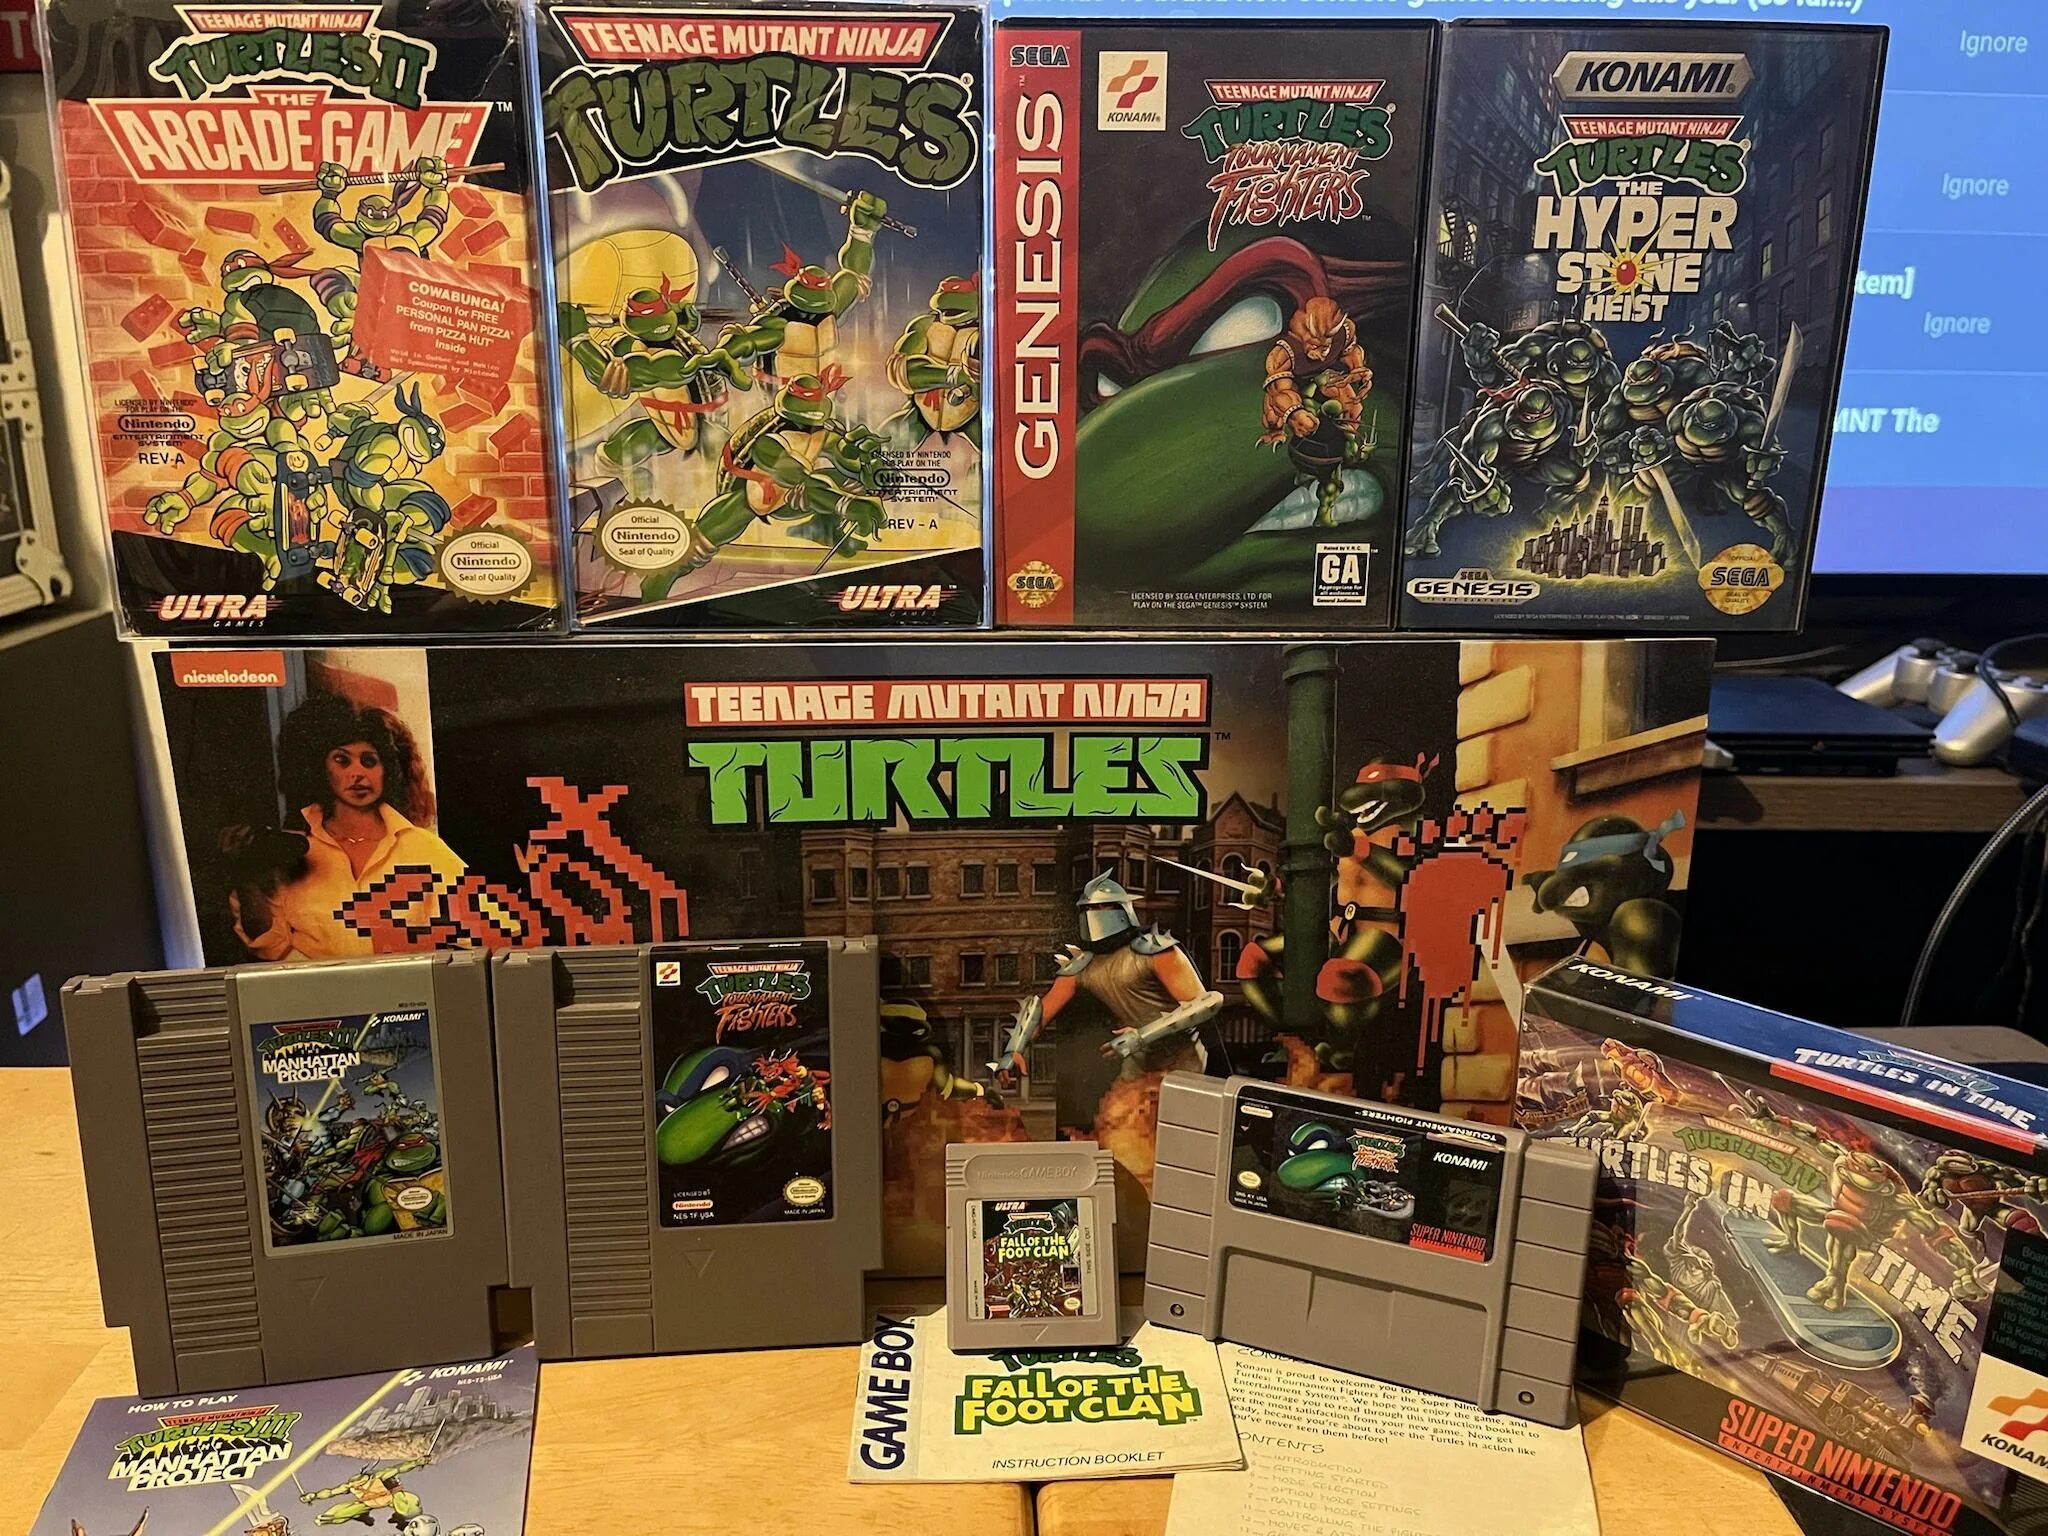 Teenage Mutant Ninja Turtles: the Cowabunga collection Konami. TMNT Cowabunga collection ps4. Teenage Mutant Ninja Turtles: the Cowabunga collection ps4. Ninja Turtles Cowabunga collection ps4.